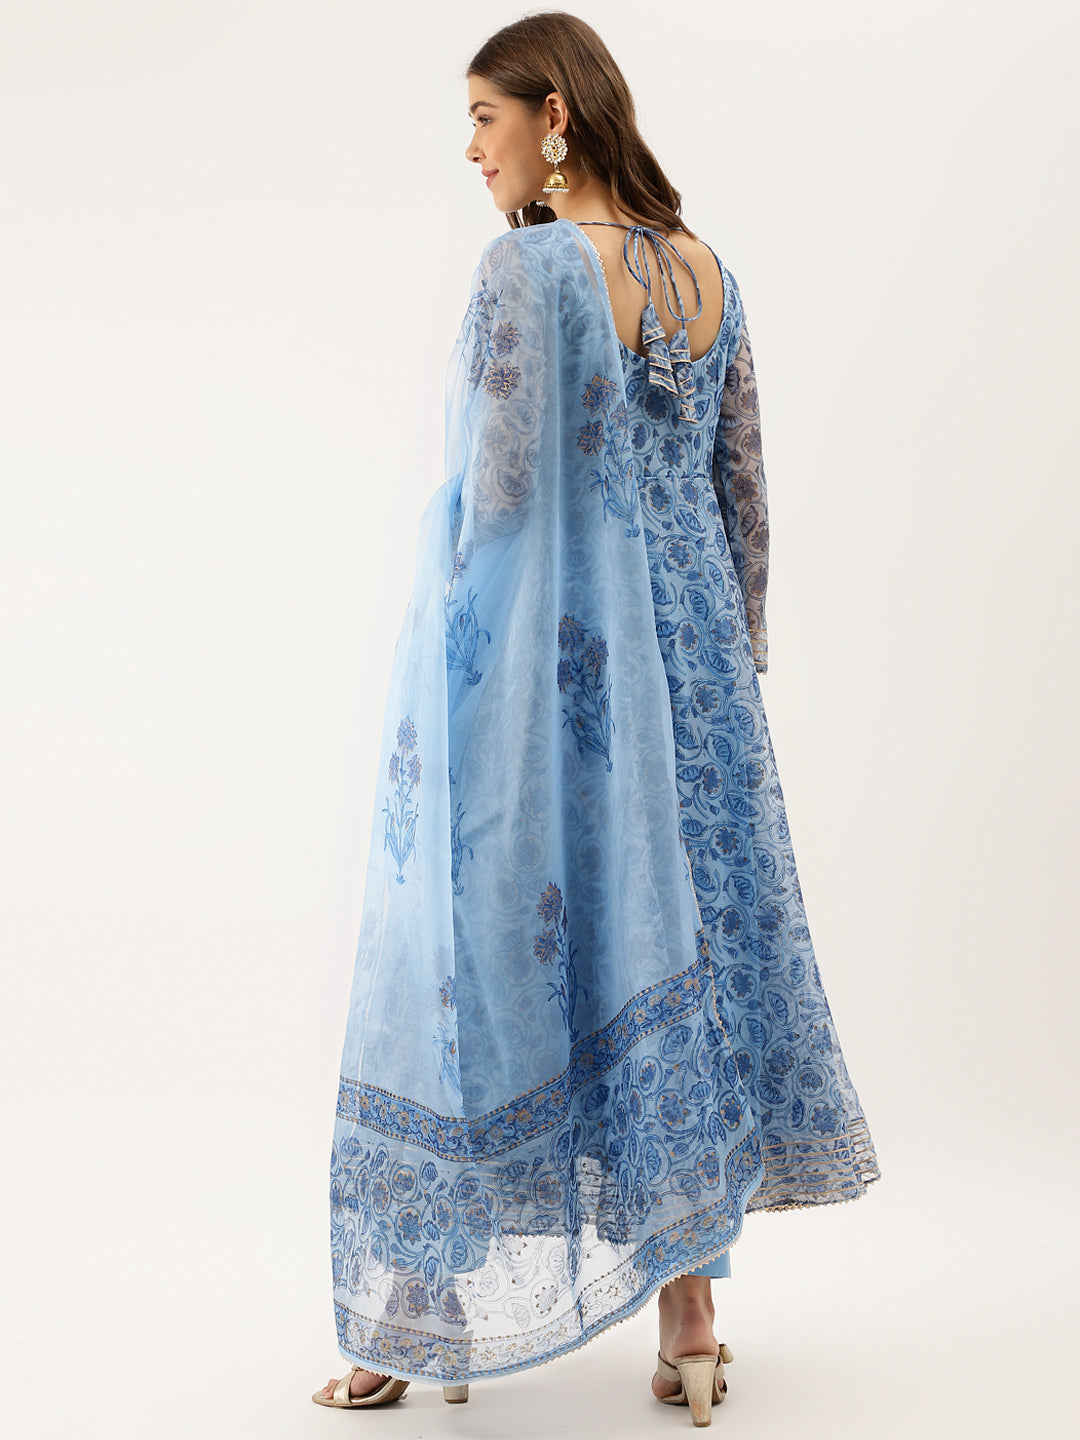 Sky Blue Floral Printed Organza Anarkali Kurta Dupatta Set with Cotton Lining